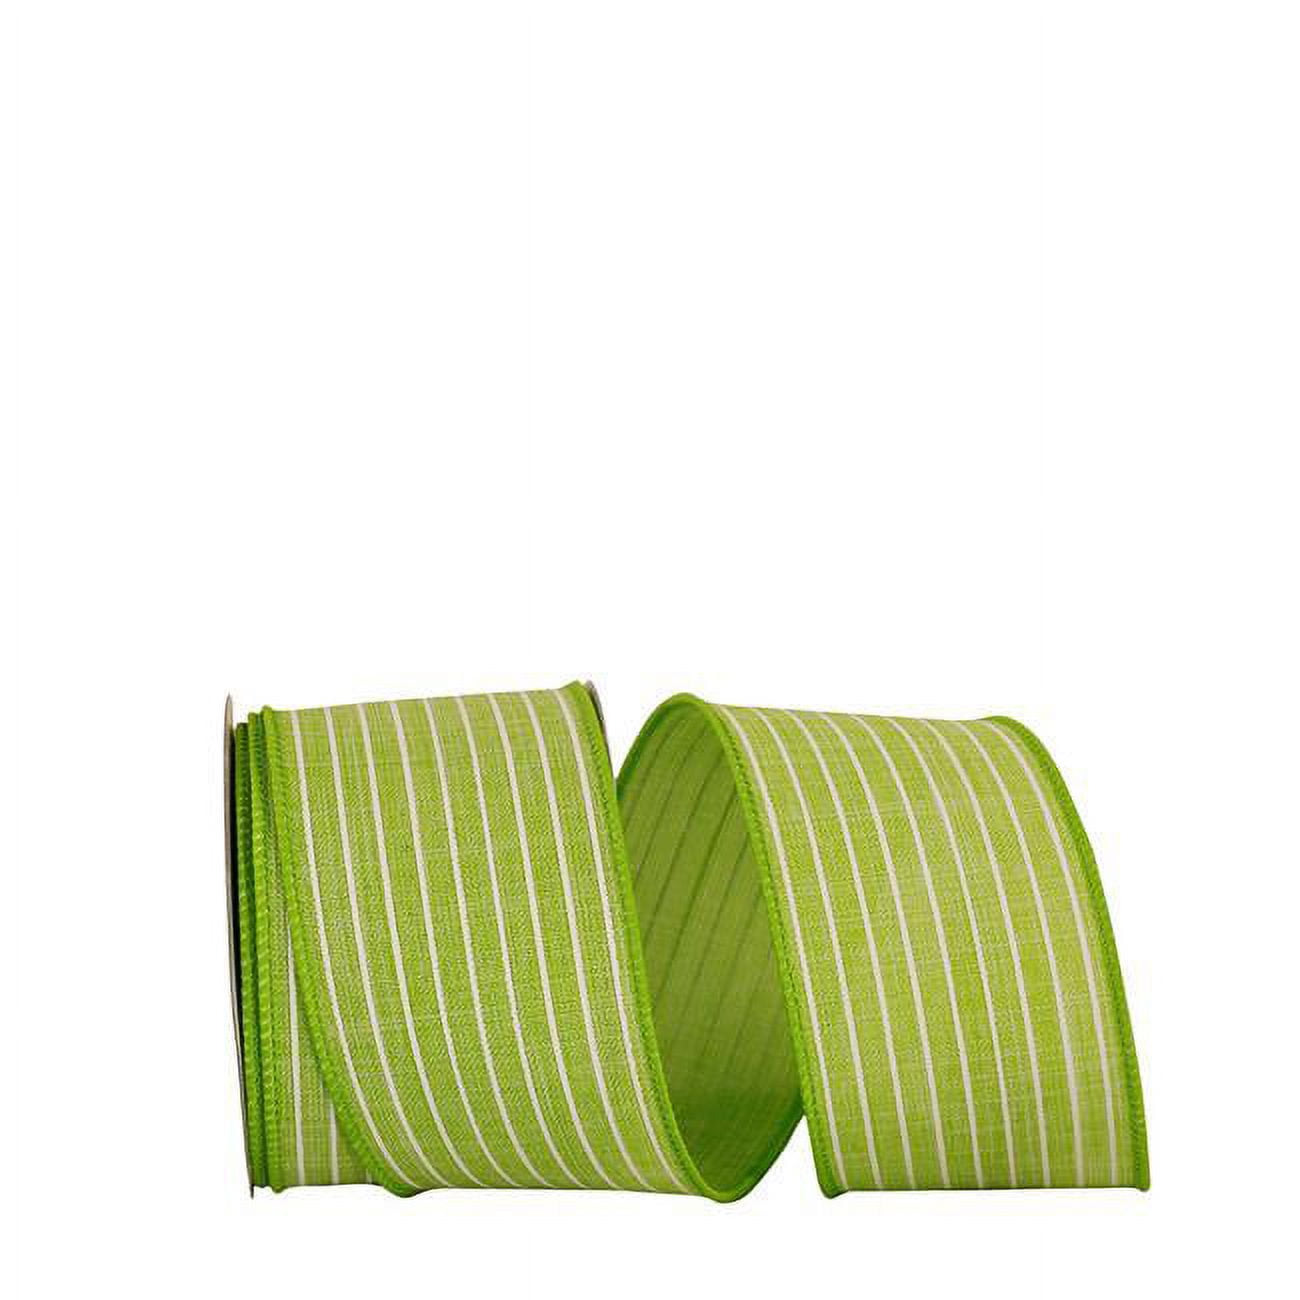 Apple Green Stripe 2 1/2 Inch x 10 Yards Grosgrain Ribbon